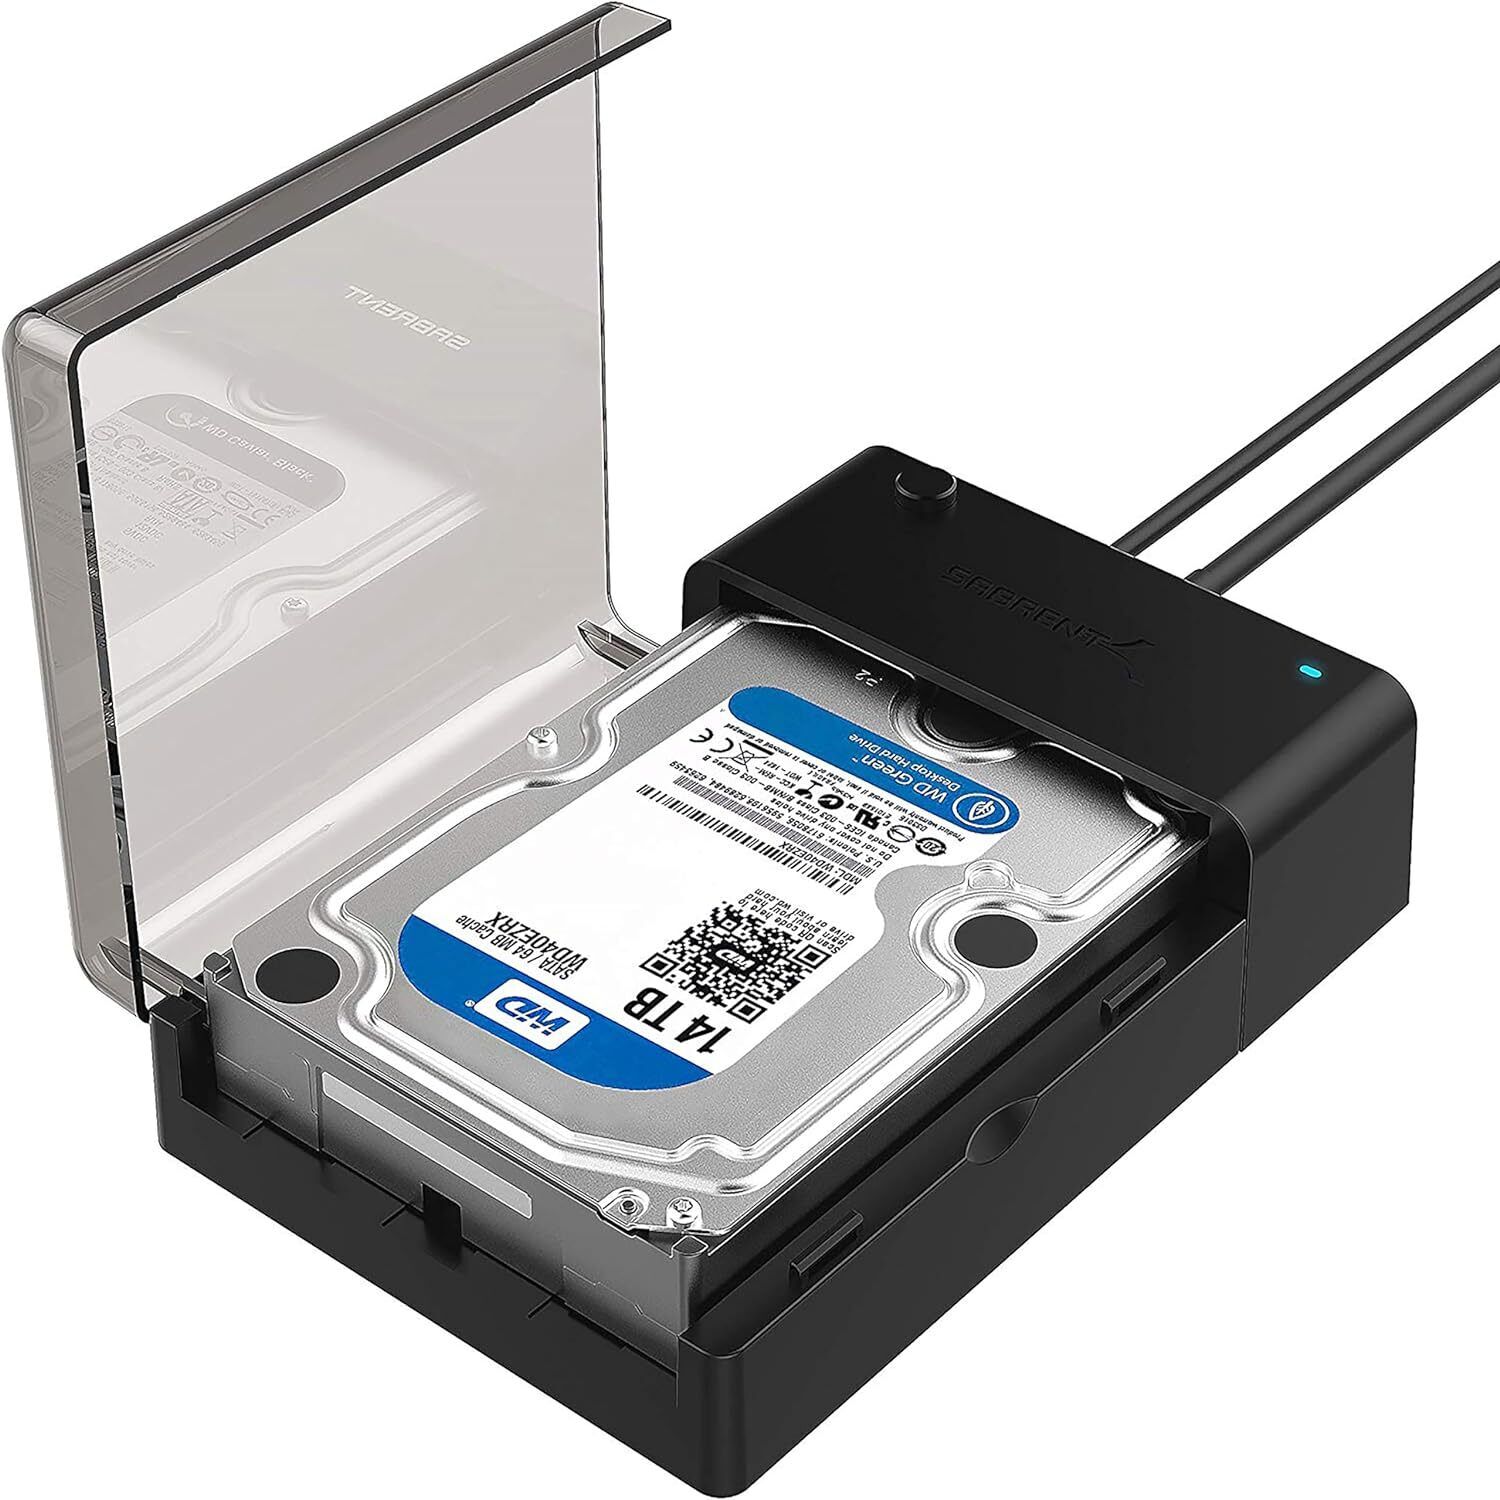 EC-DFLT USB 3.0 to SATA External Hard Drive flat Docking Station (USED)